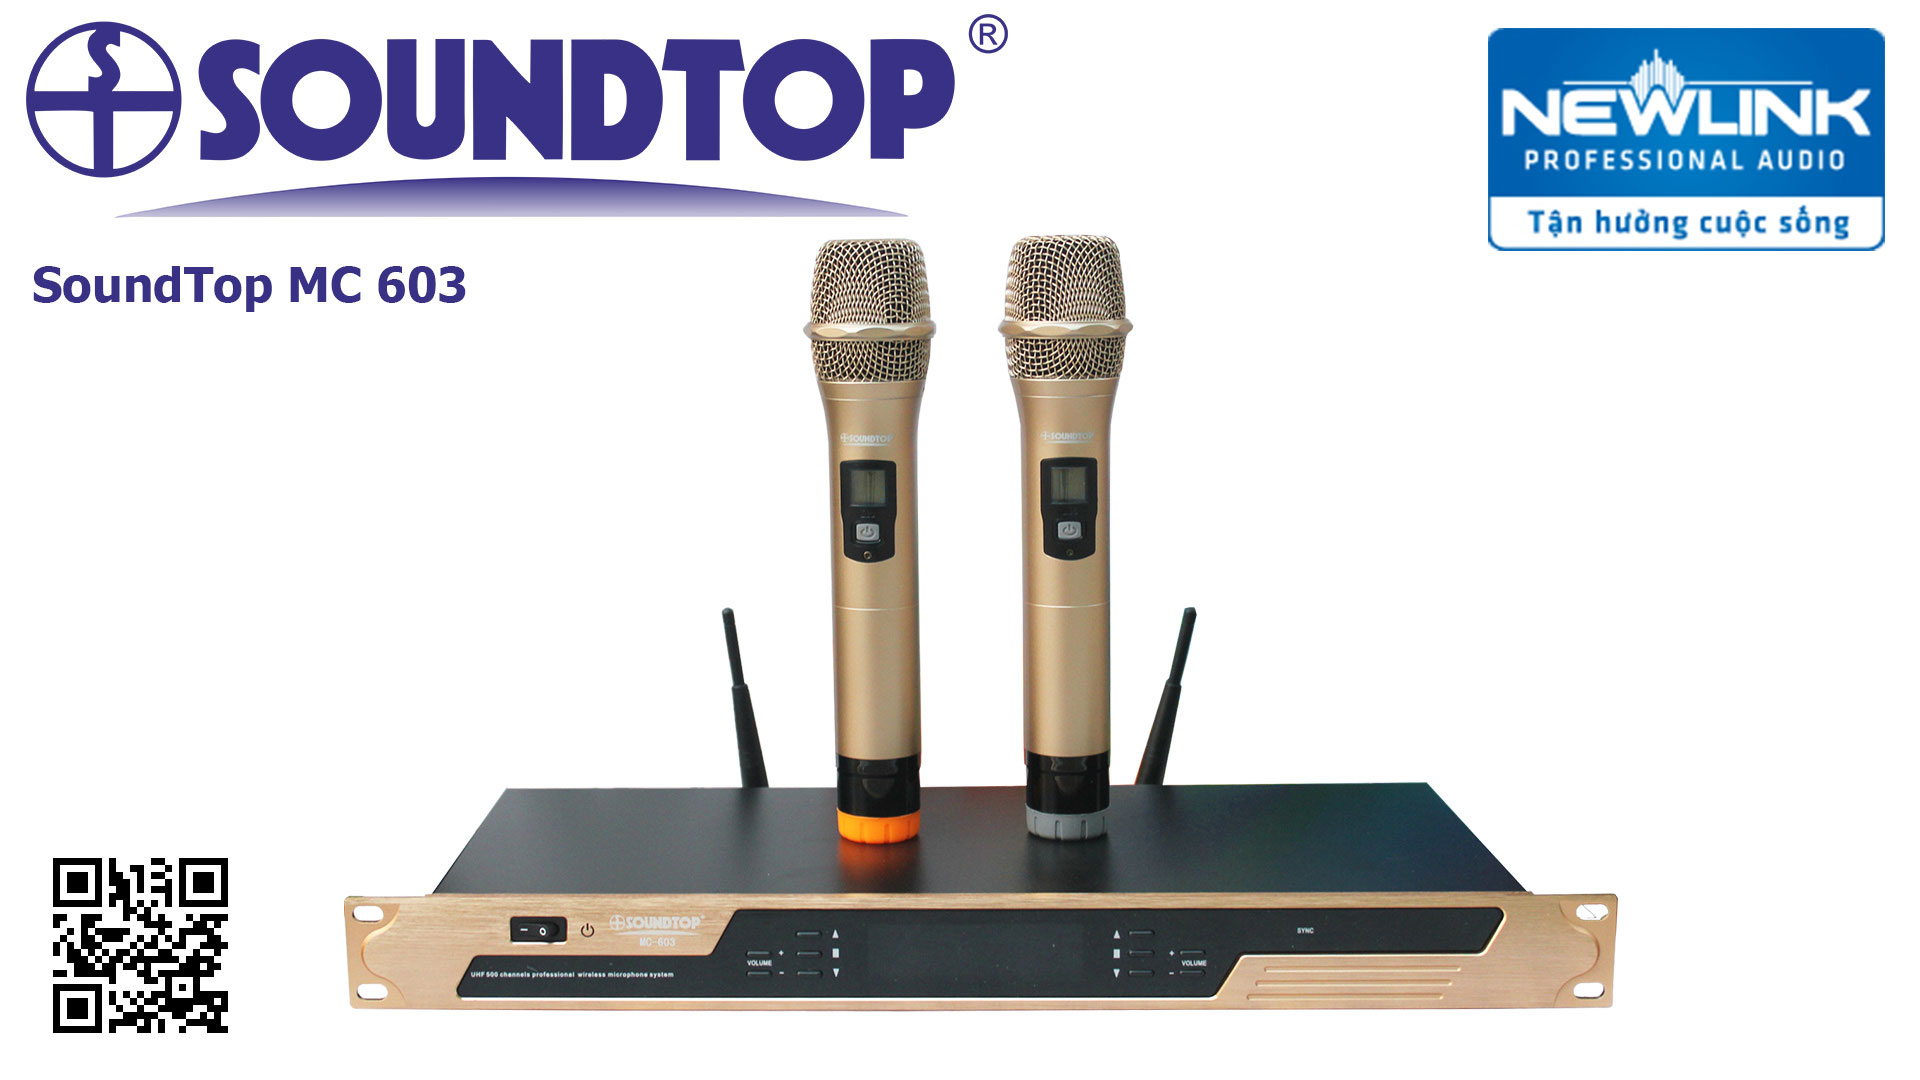 SoundTop MC 603